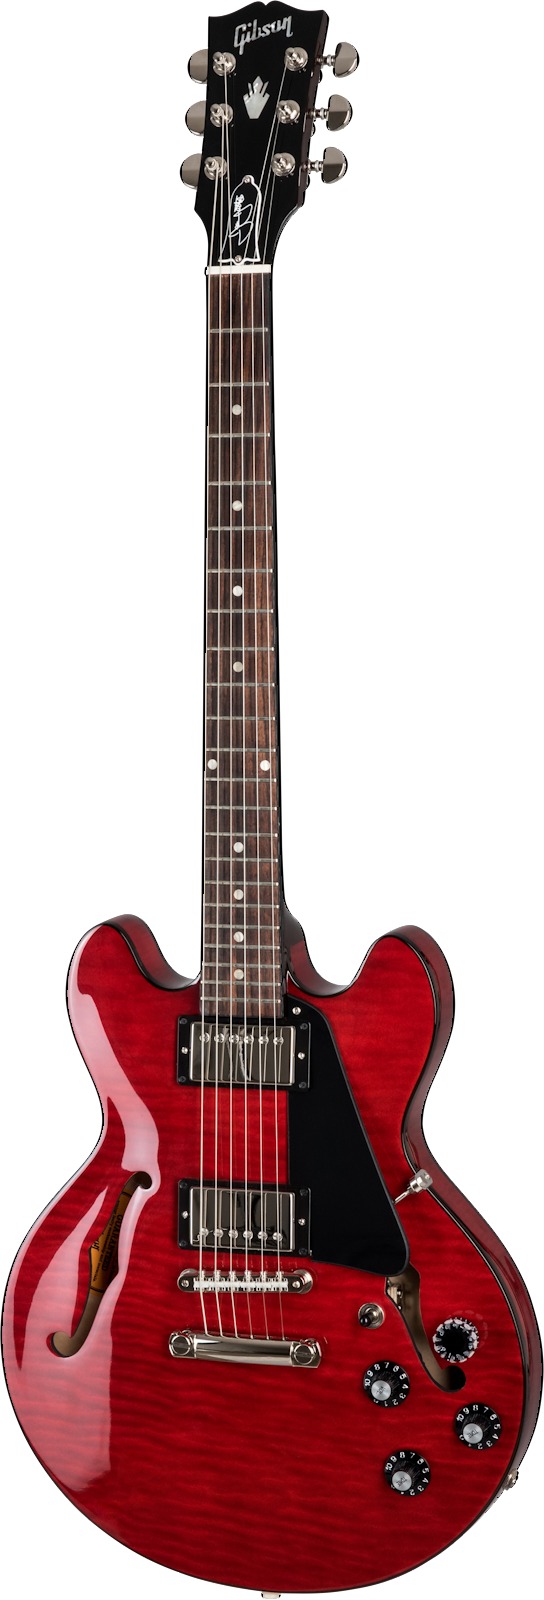 Gibson ES 339 Signature Joan Jett (wine red)